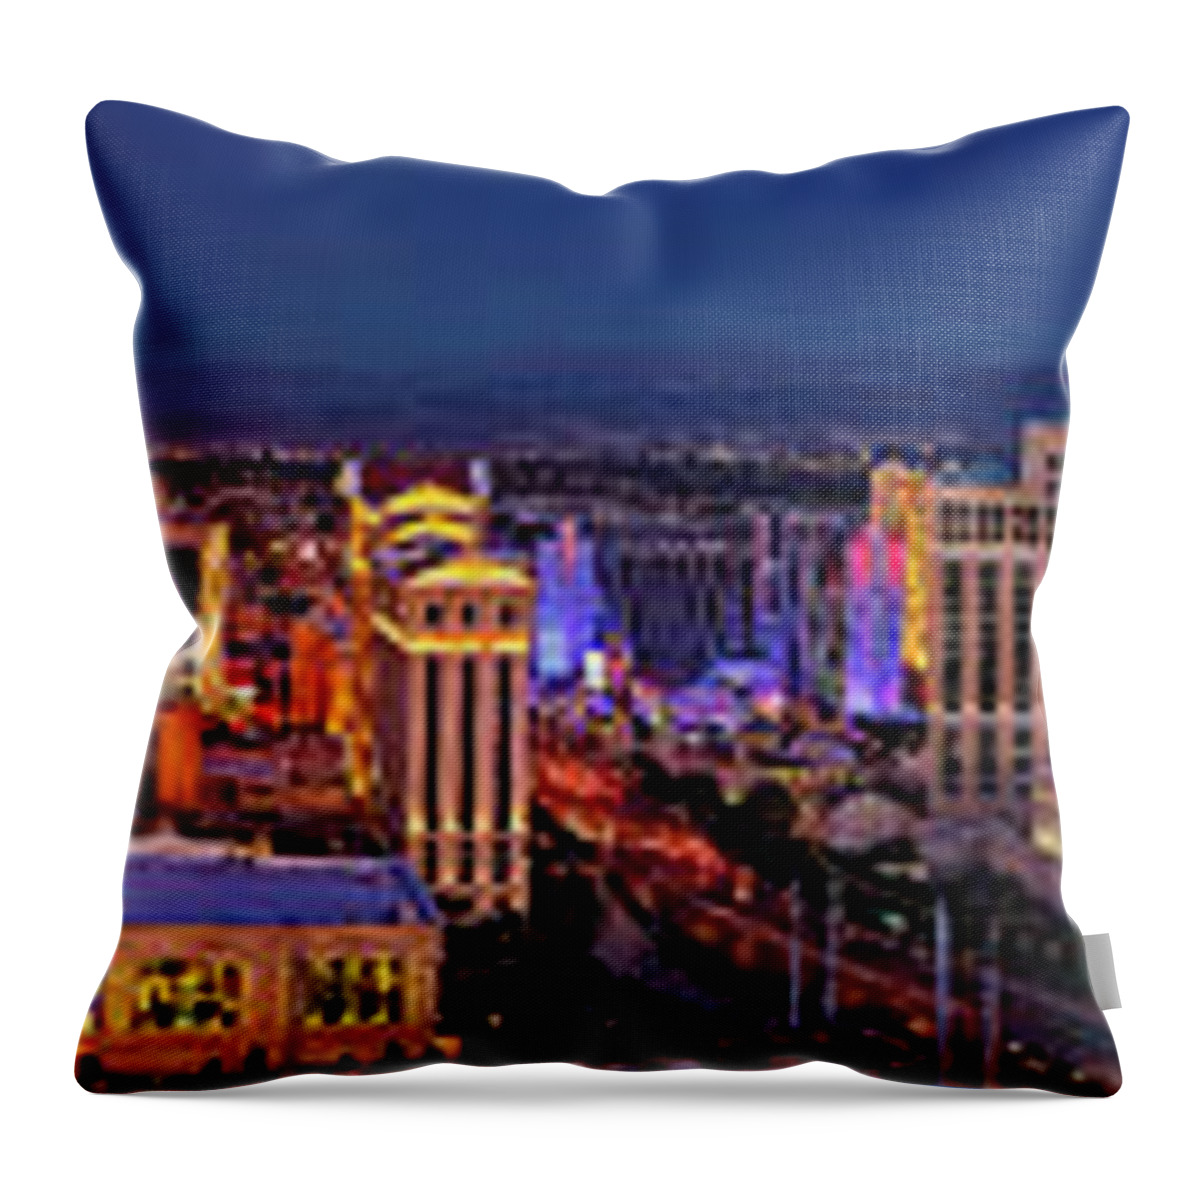 Las Vegas Throw Pillow featuring the photograph Las Vegas Panoramic Aerial View by Susan Candelario